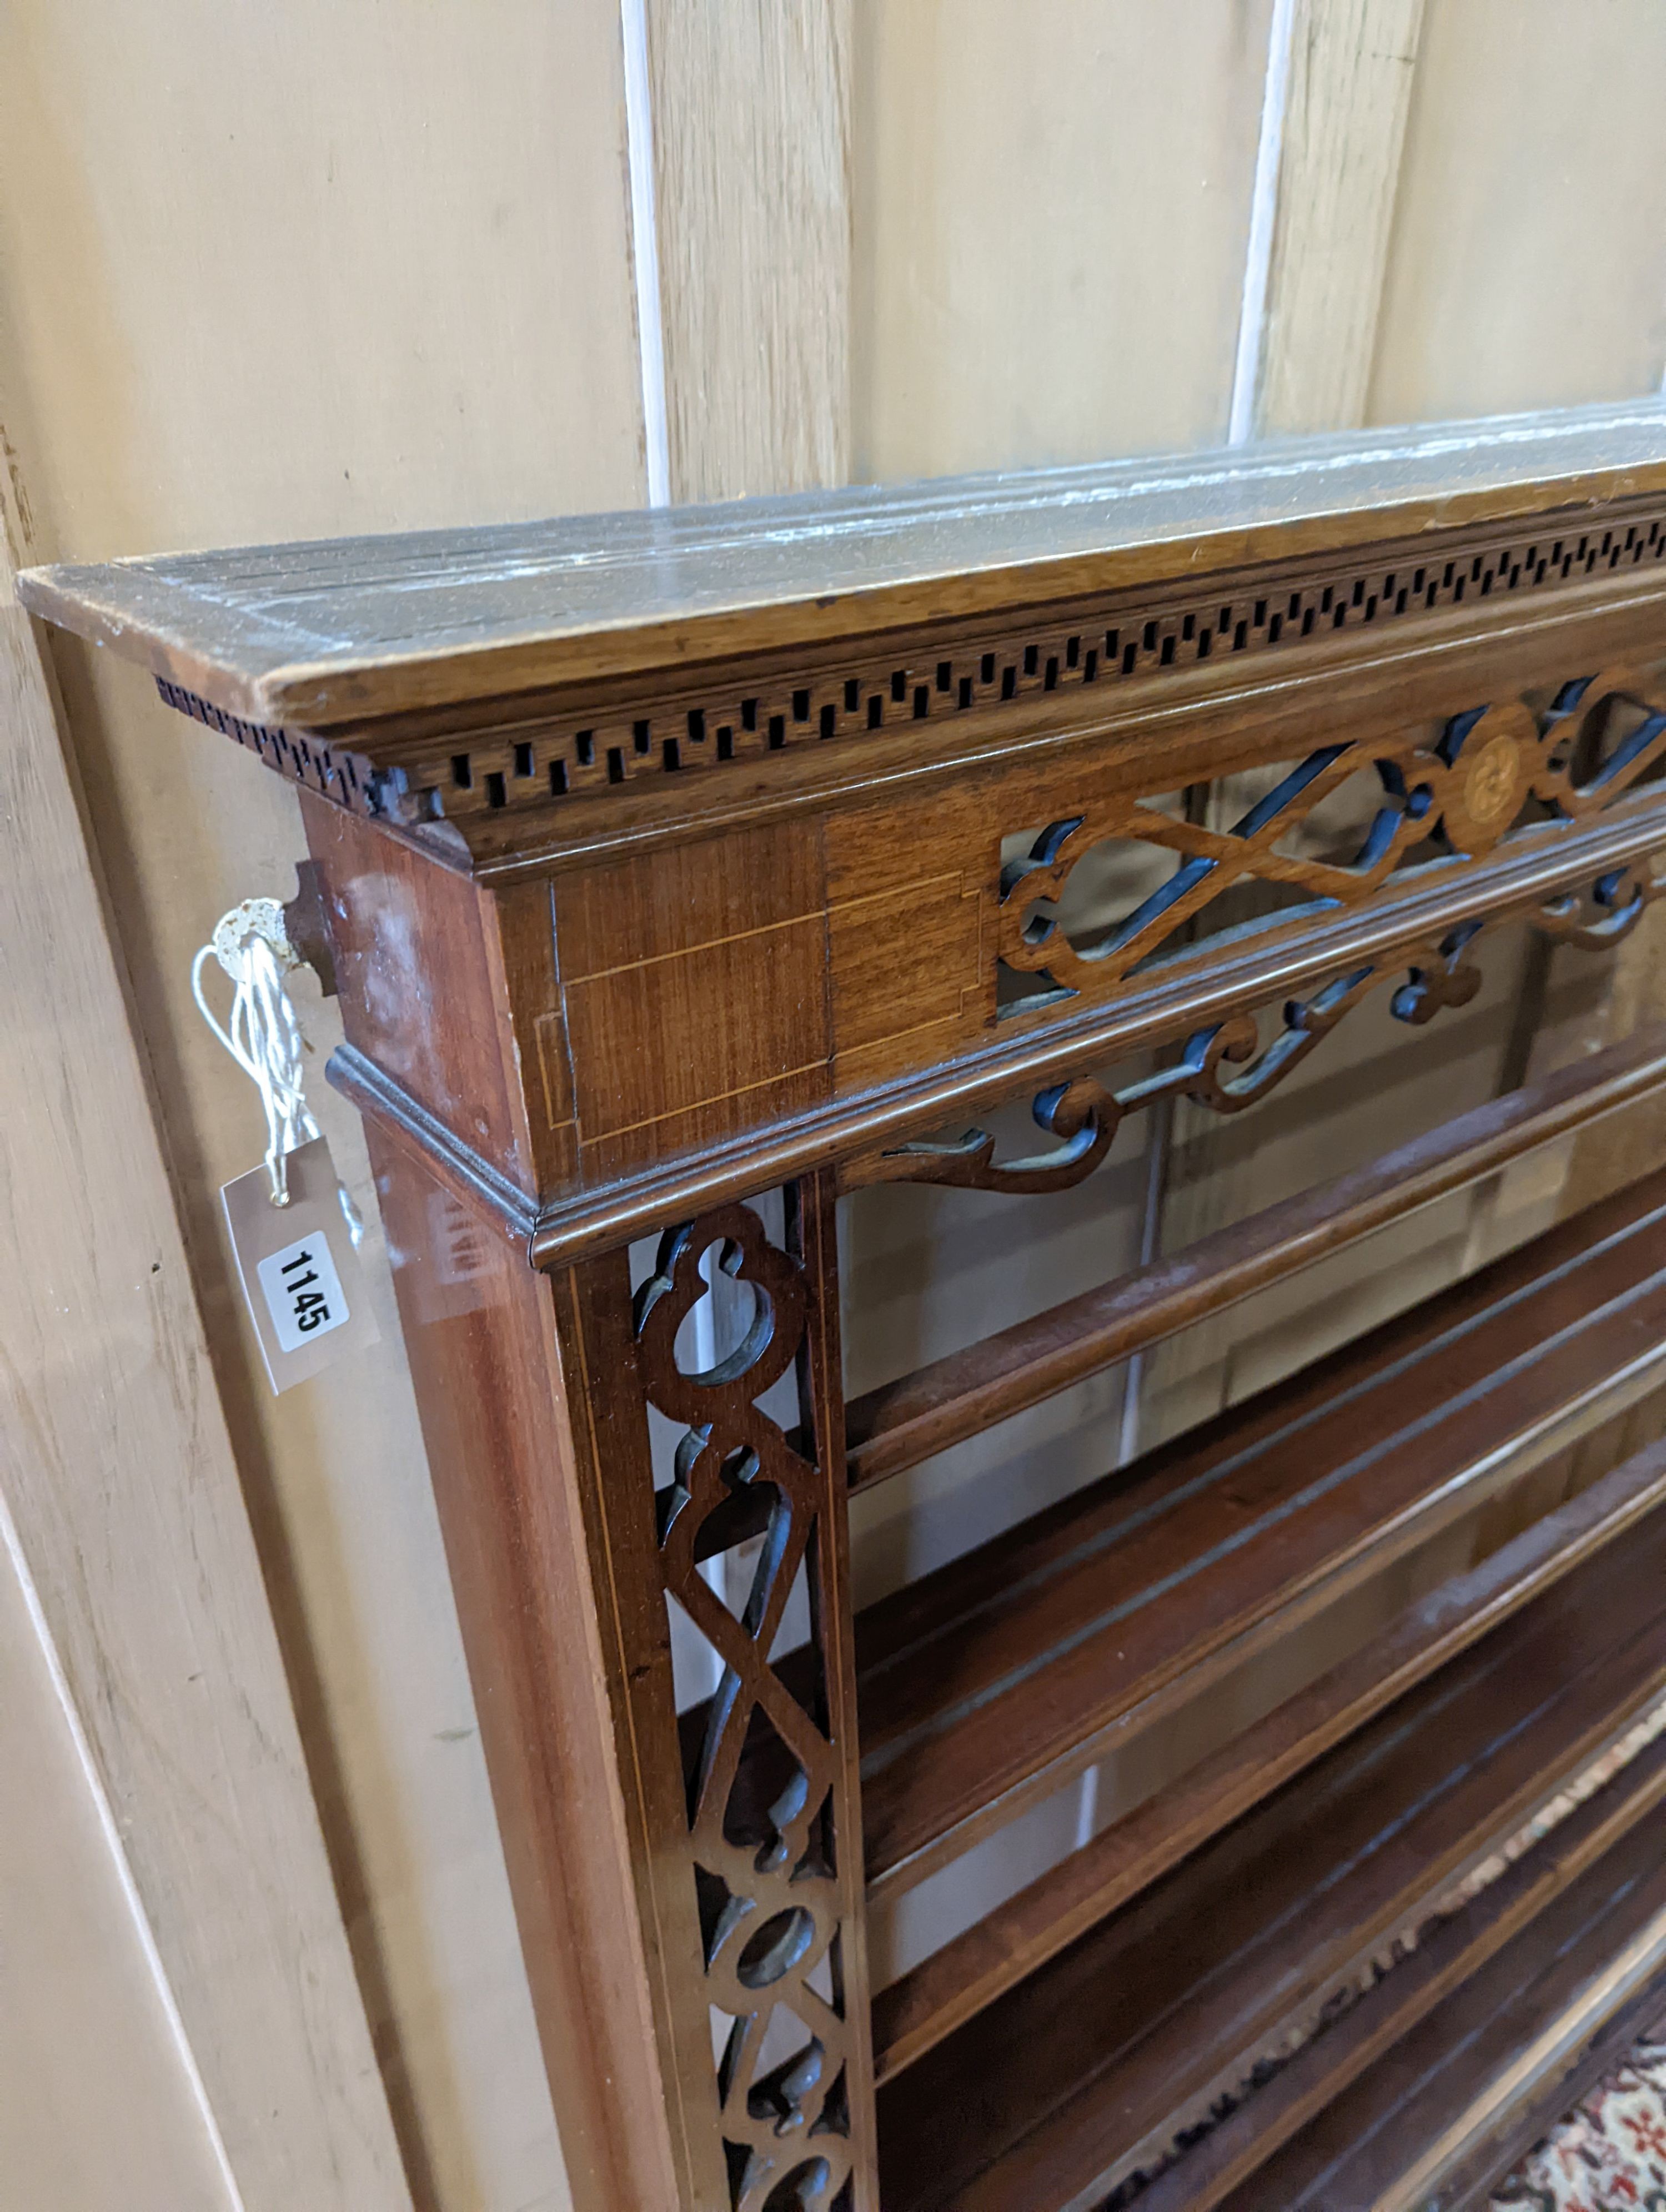 A George III style inlaid mahogany plate rack, width 135cm, depth 17cm, height 119cm